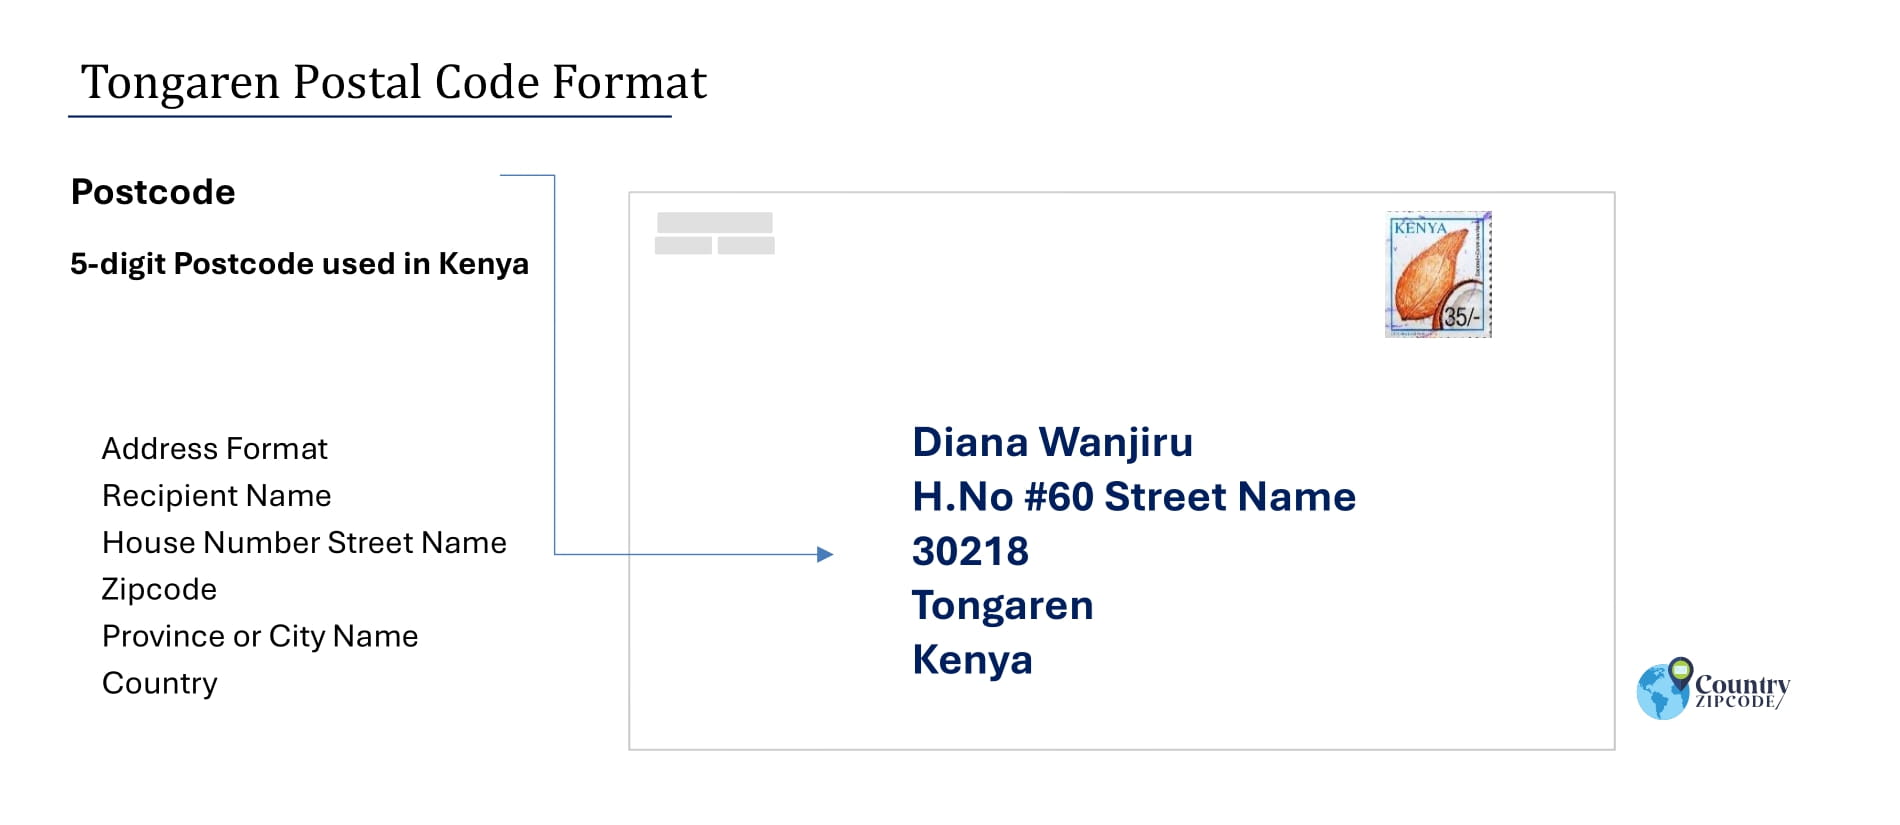 Example of Tongaren Address and postal code format